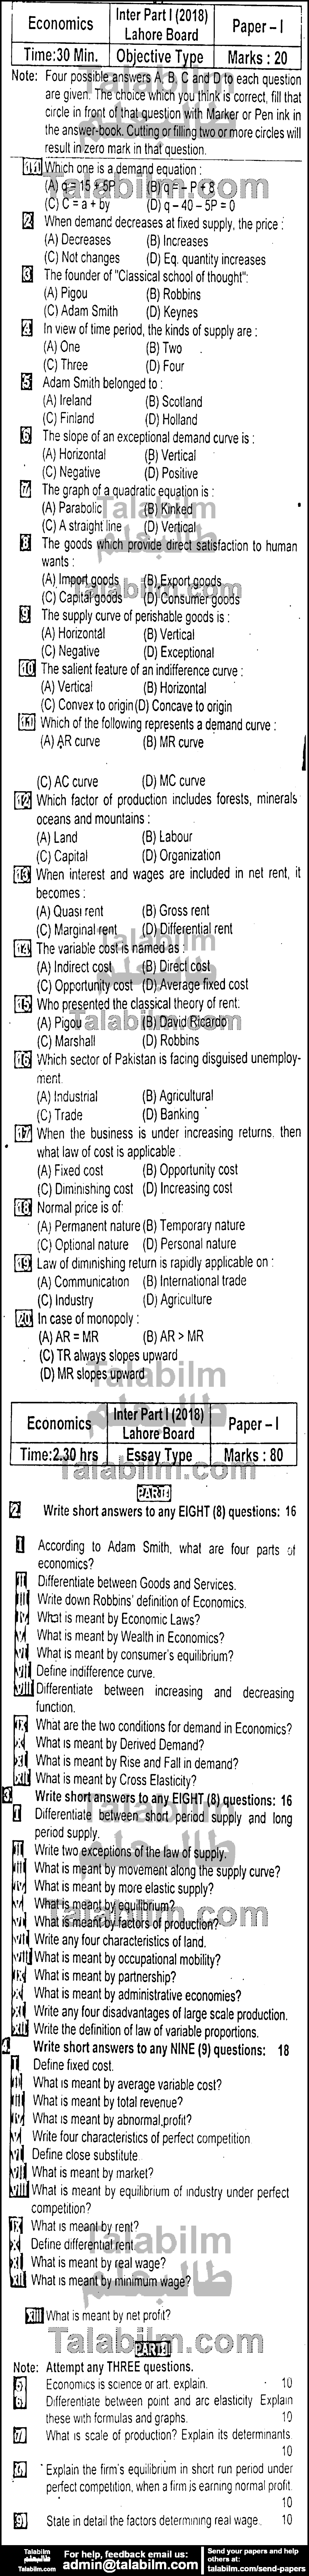 Economics 0 past paper for Group-I 2018